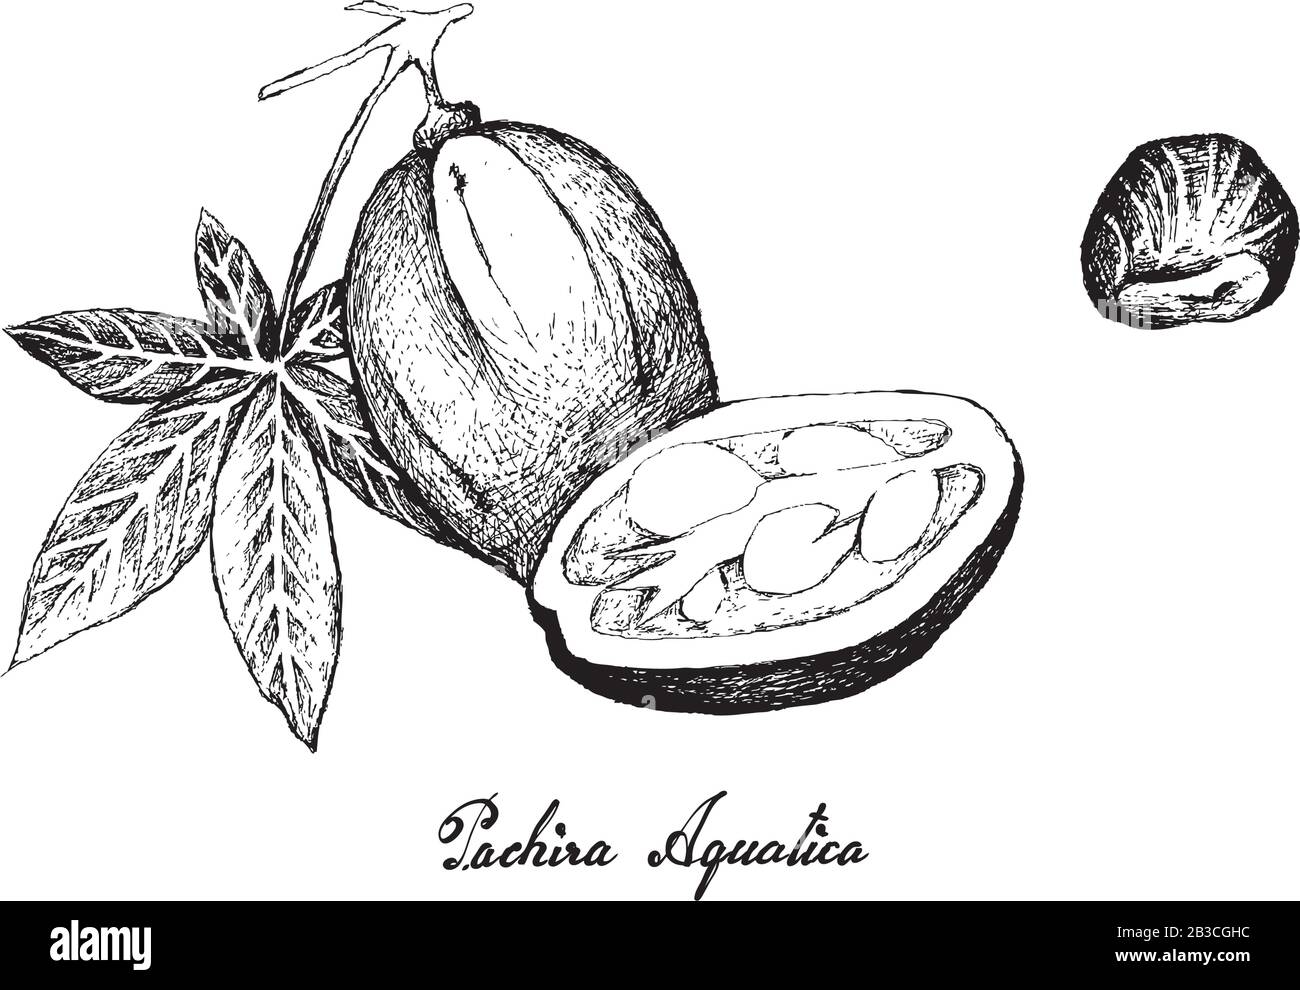 Illustration Hand Drawn Sketch of Pachira Aquatica, Malabar Chestnut, French Peanut or Guiana Chestnut Fruits on Tree Branch. Stock Vector